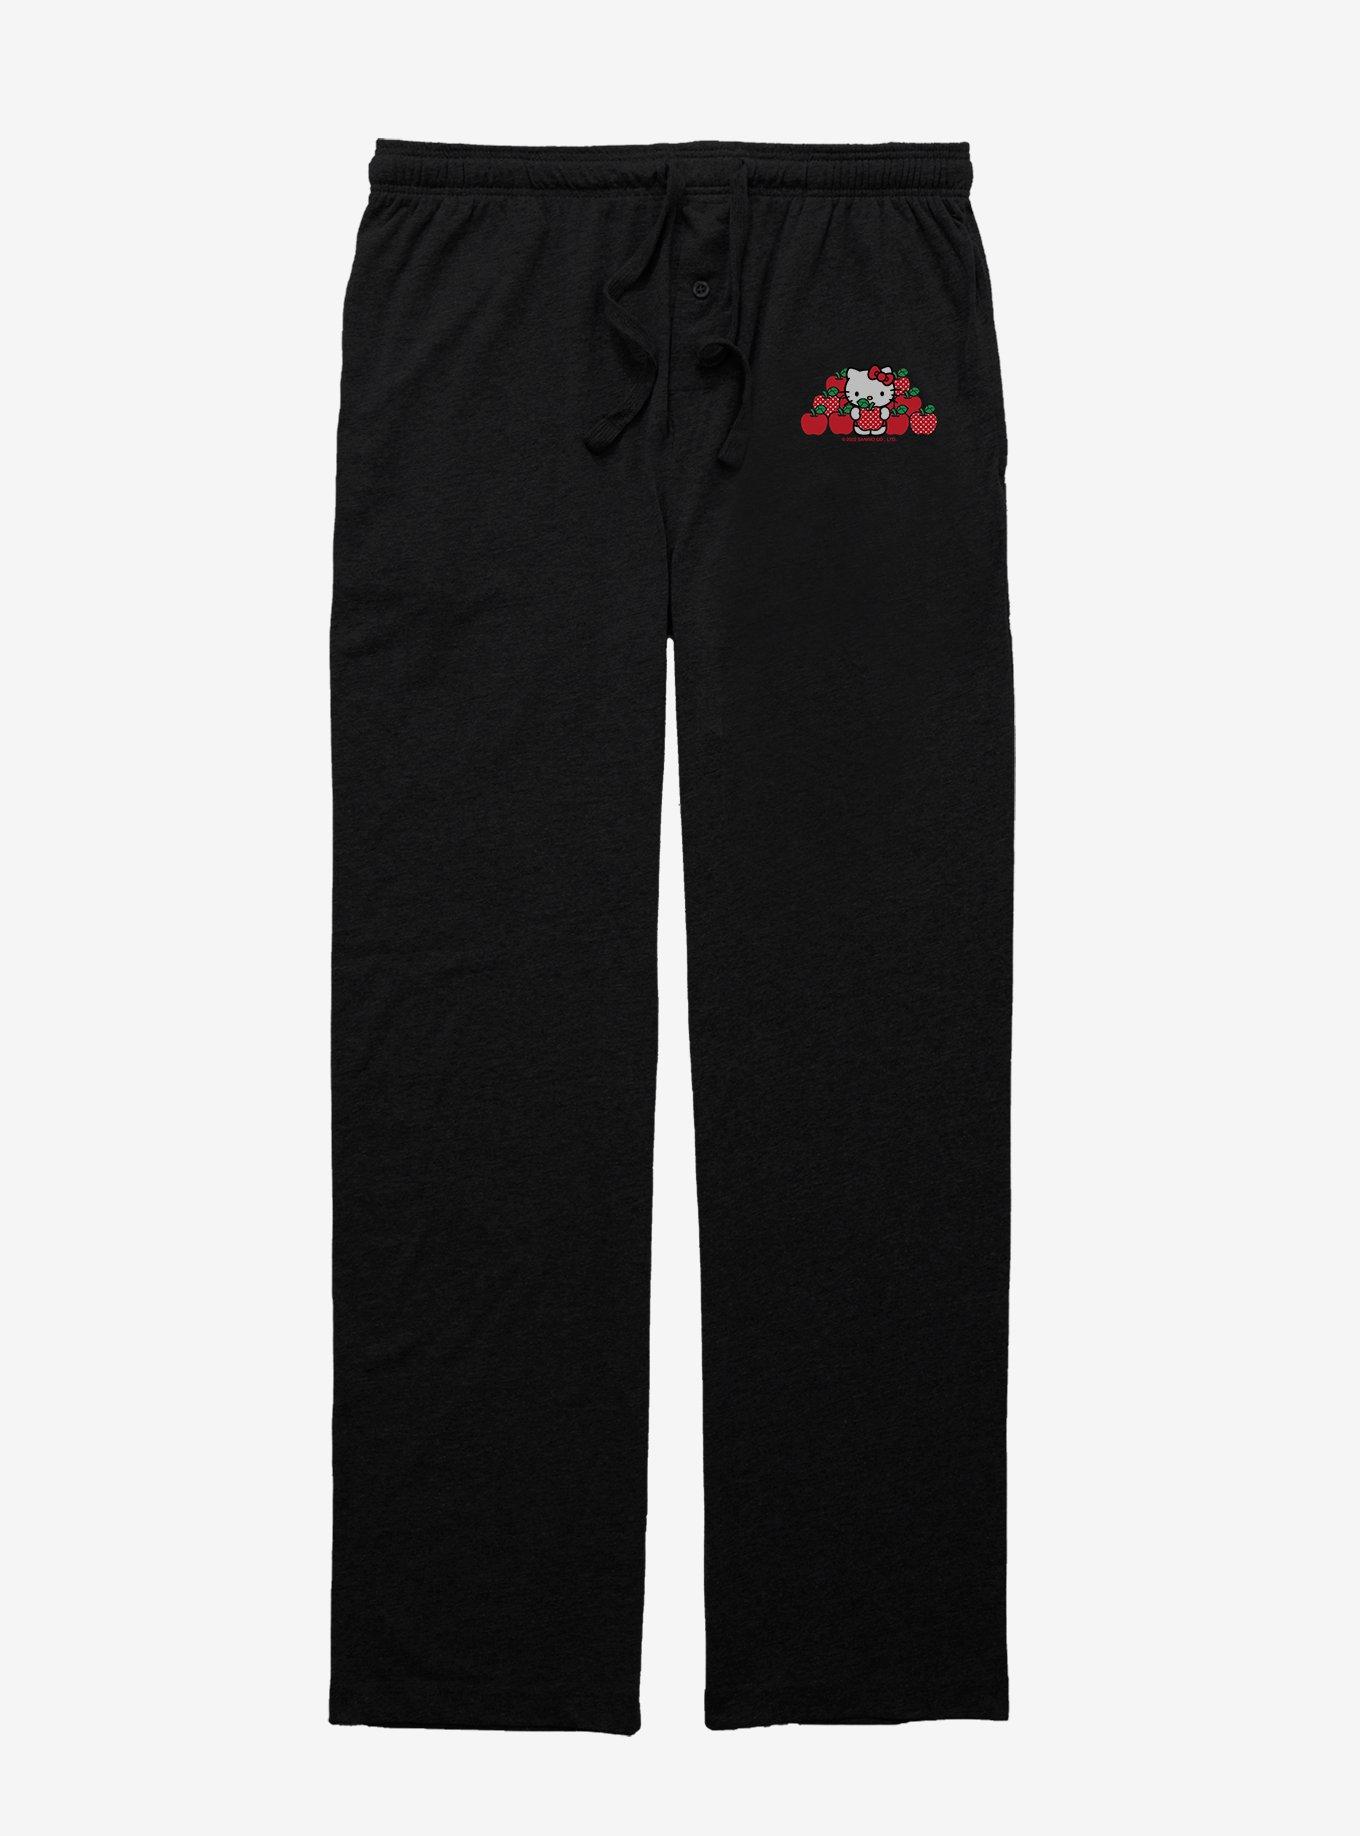 Heinz Pickle Pajama Pants